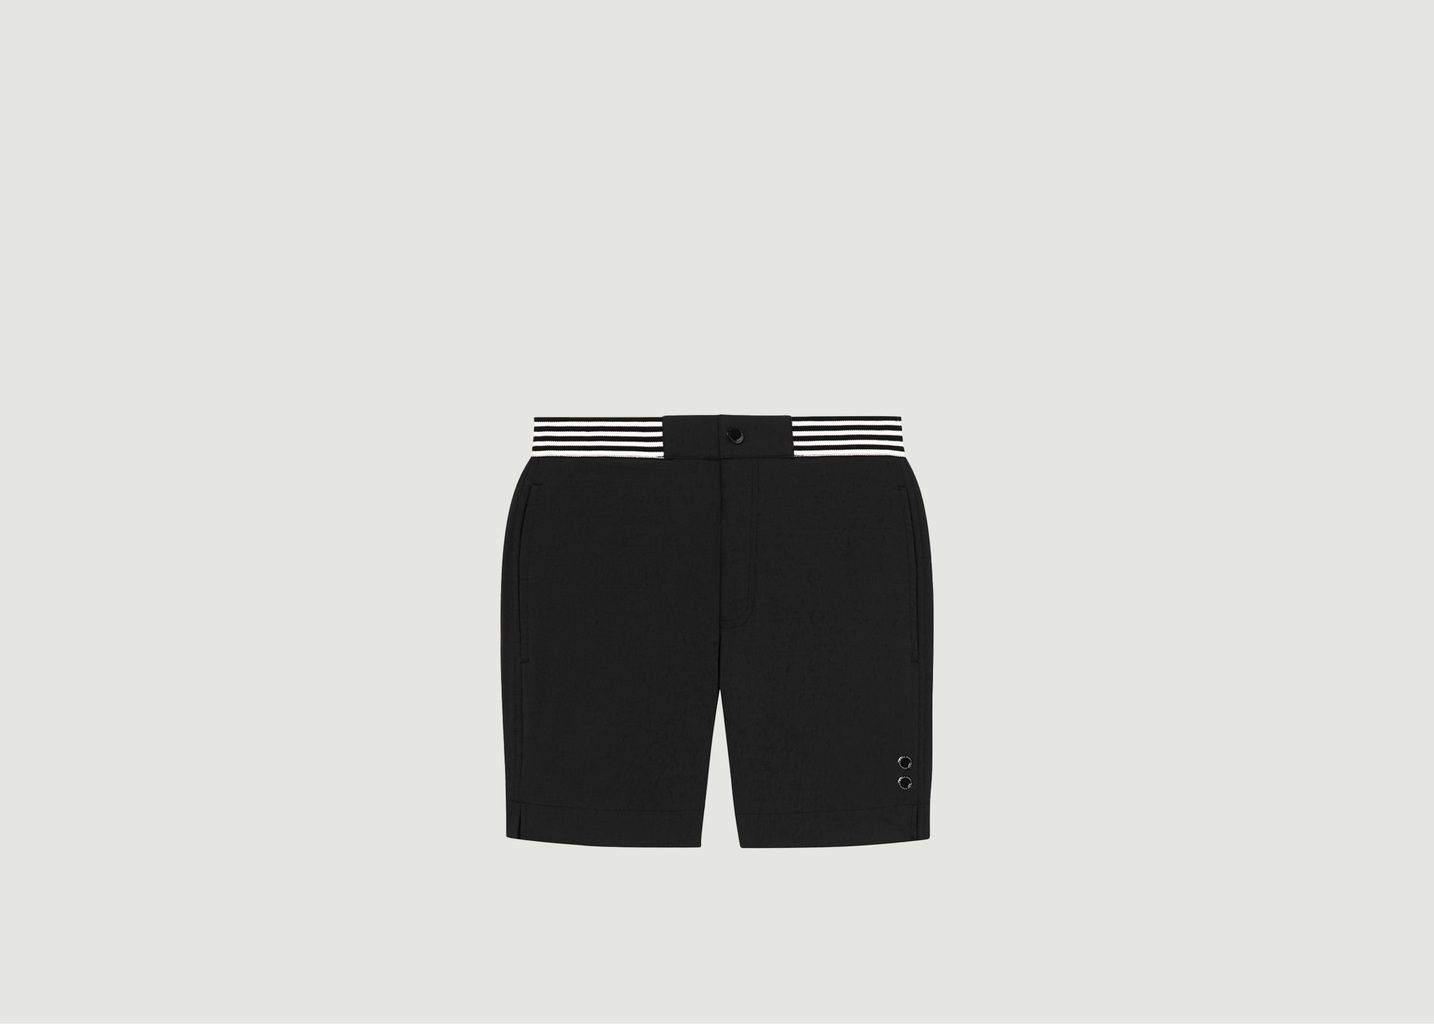 Urban Swim Shorts - Ron Dorff